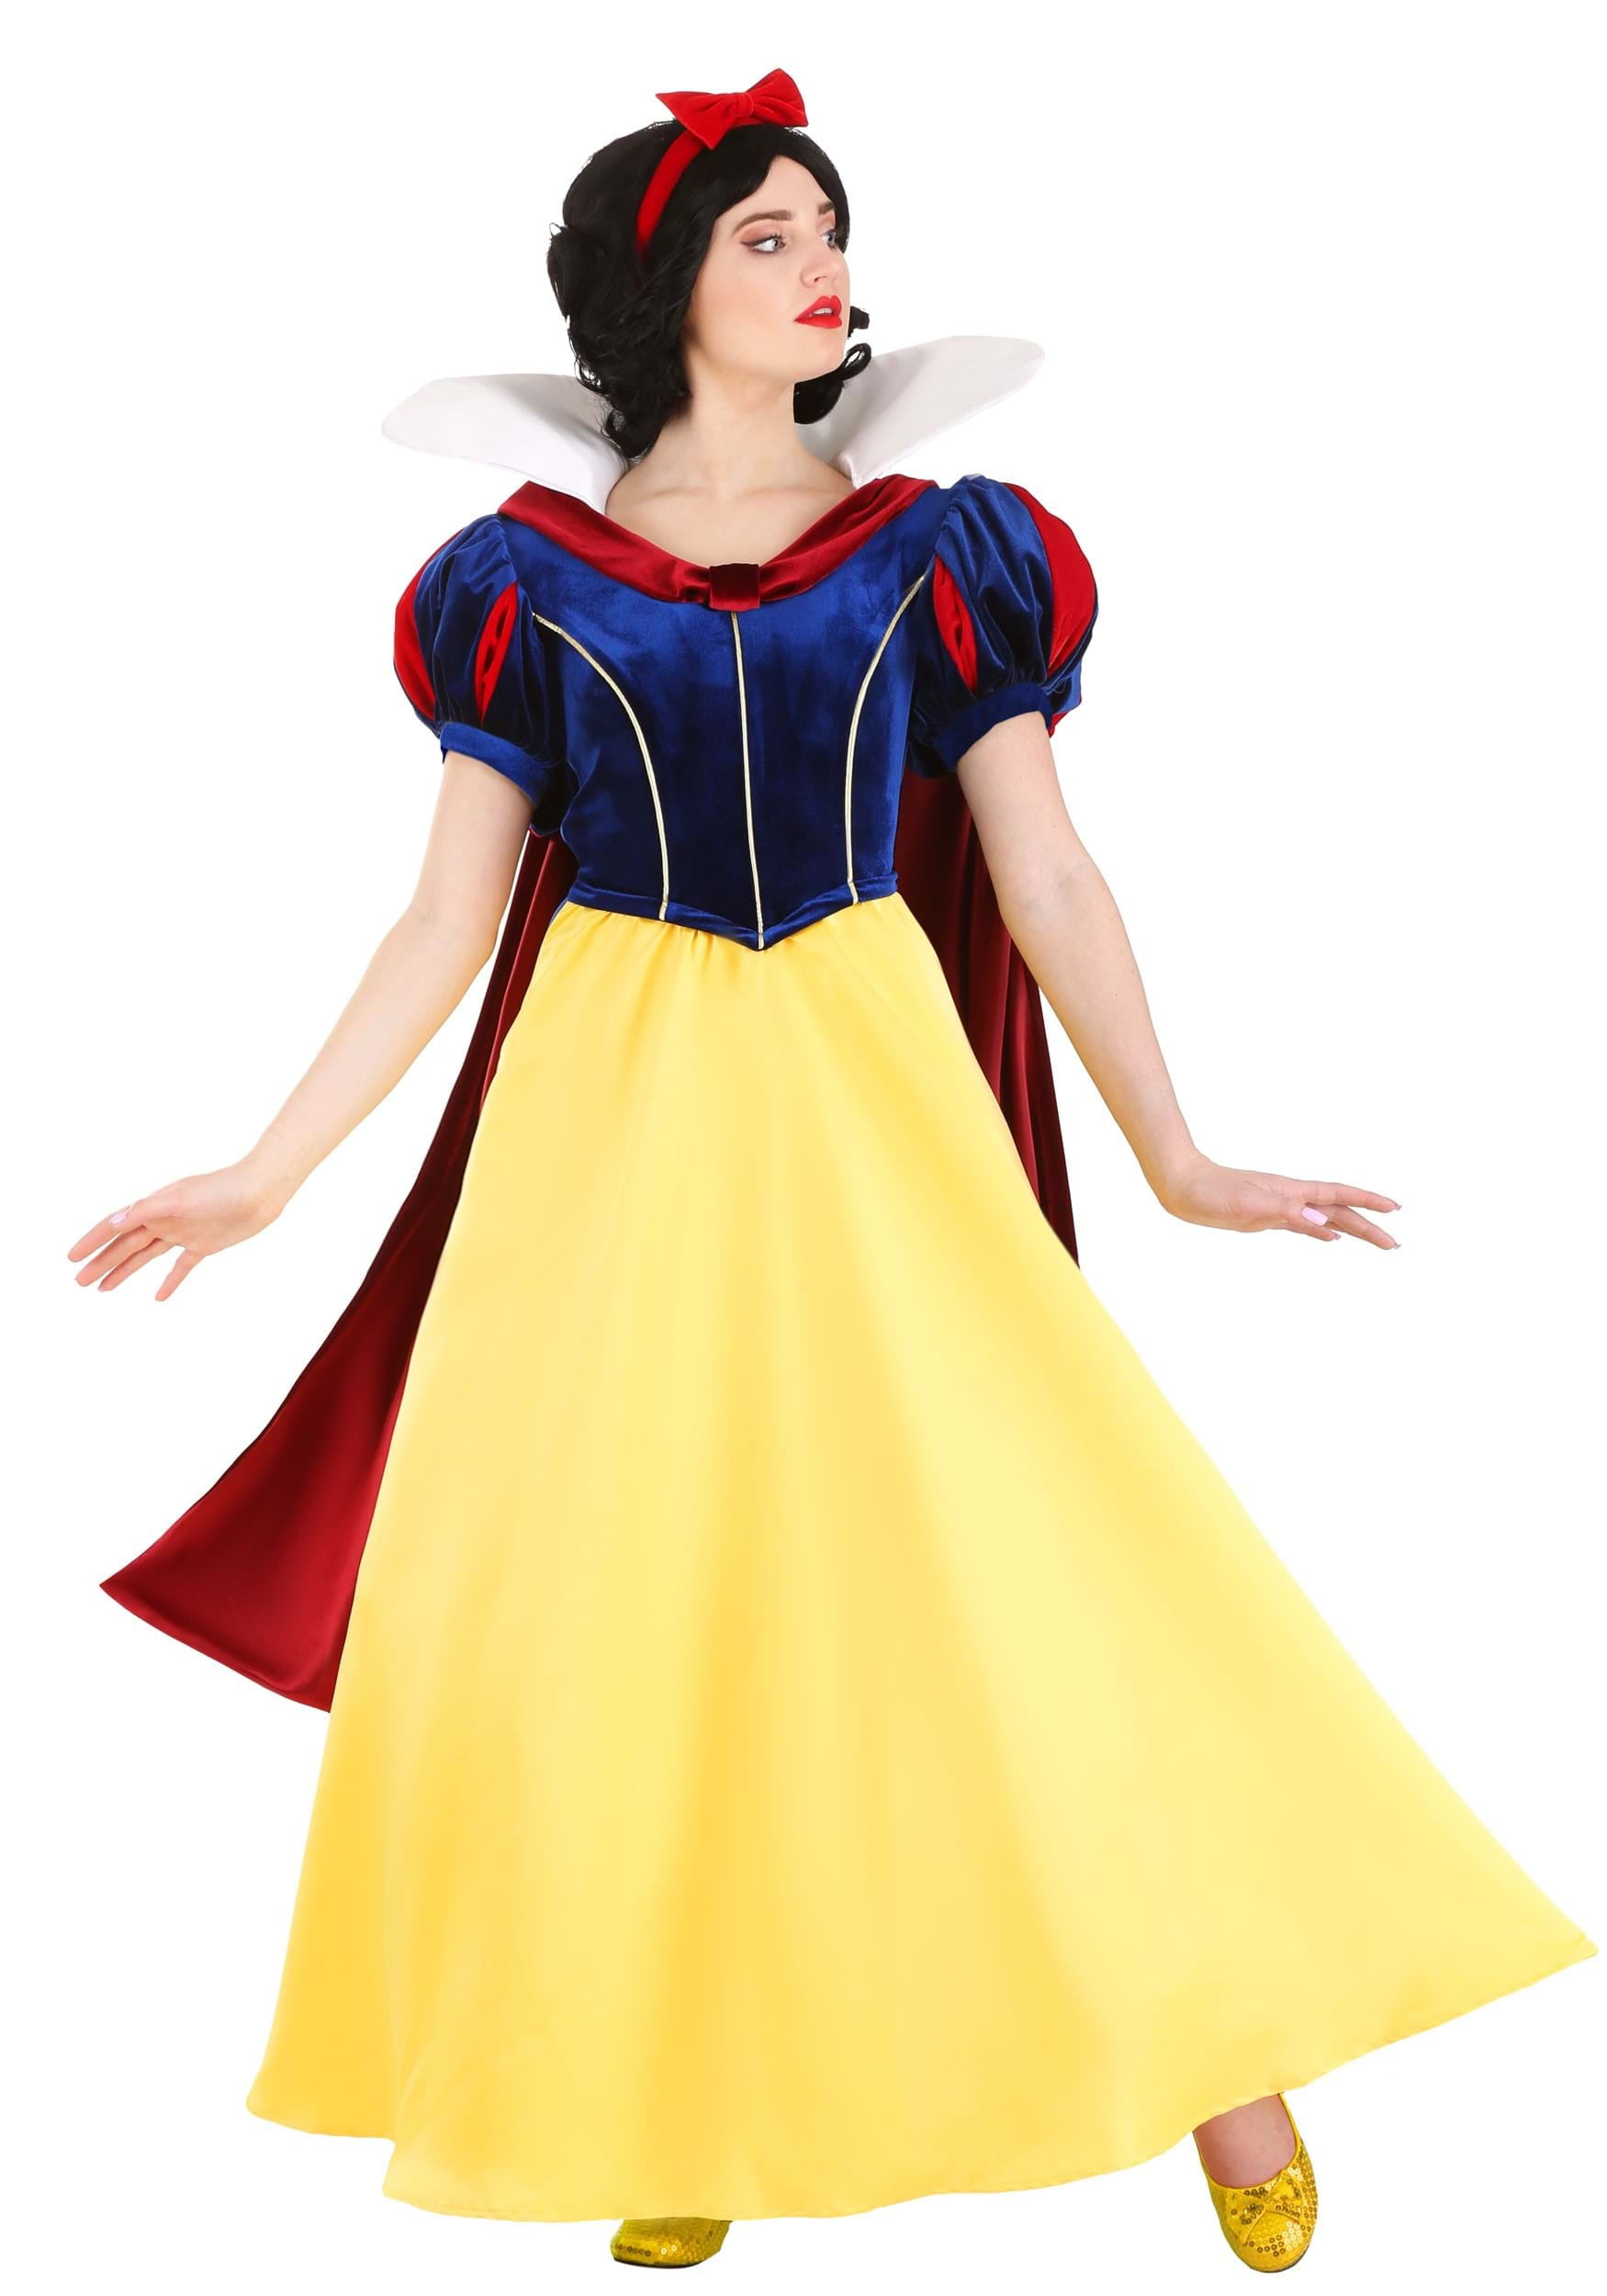 New Disney Snow White Deluxe Costume Girl Dress Up Princess Halloween Sz 2/3 XXS